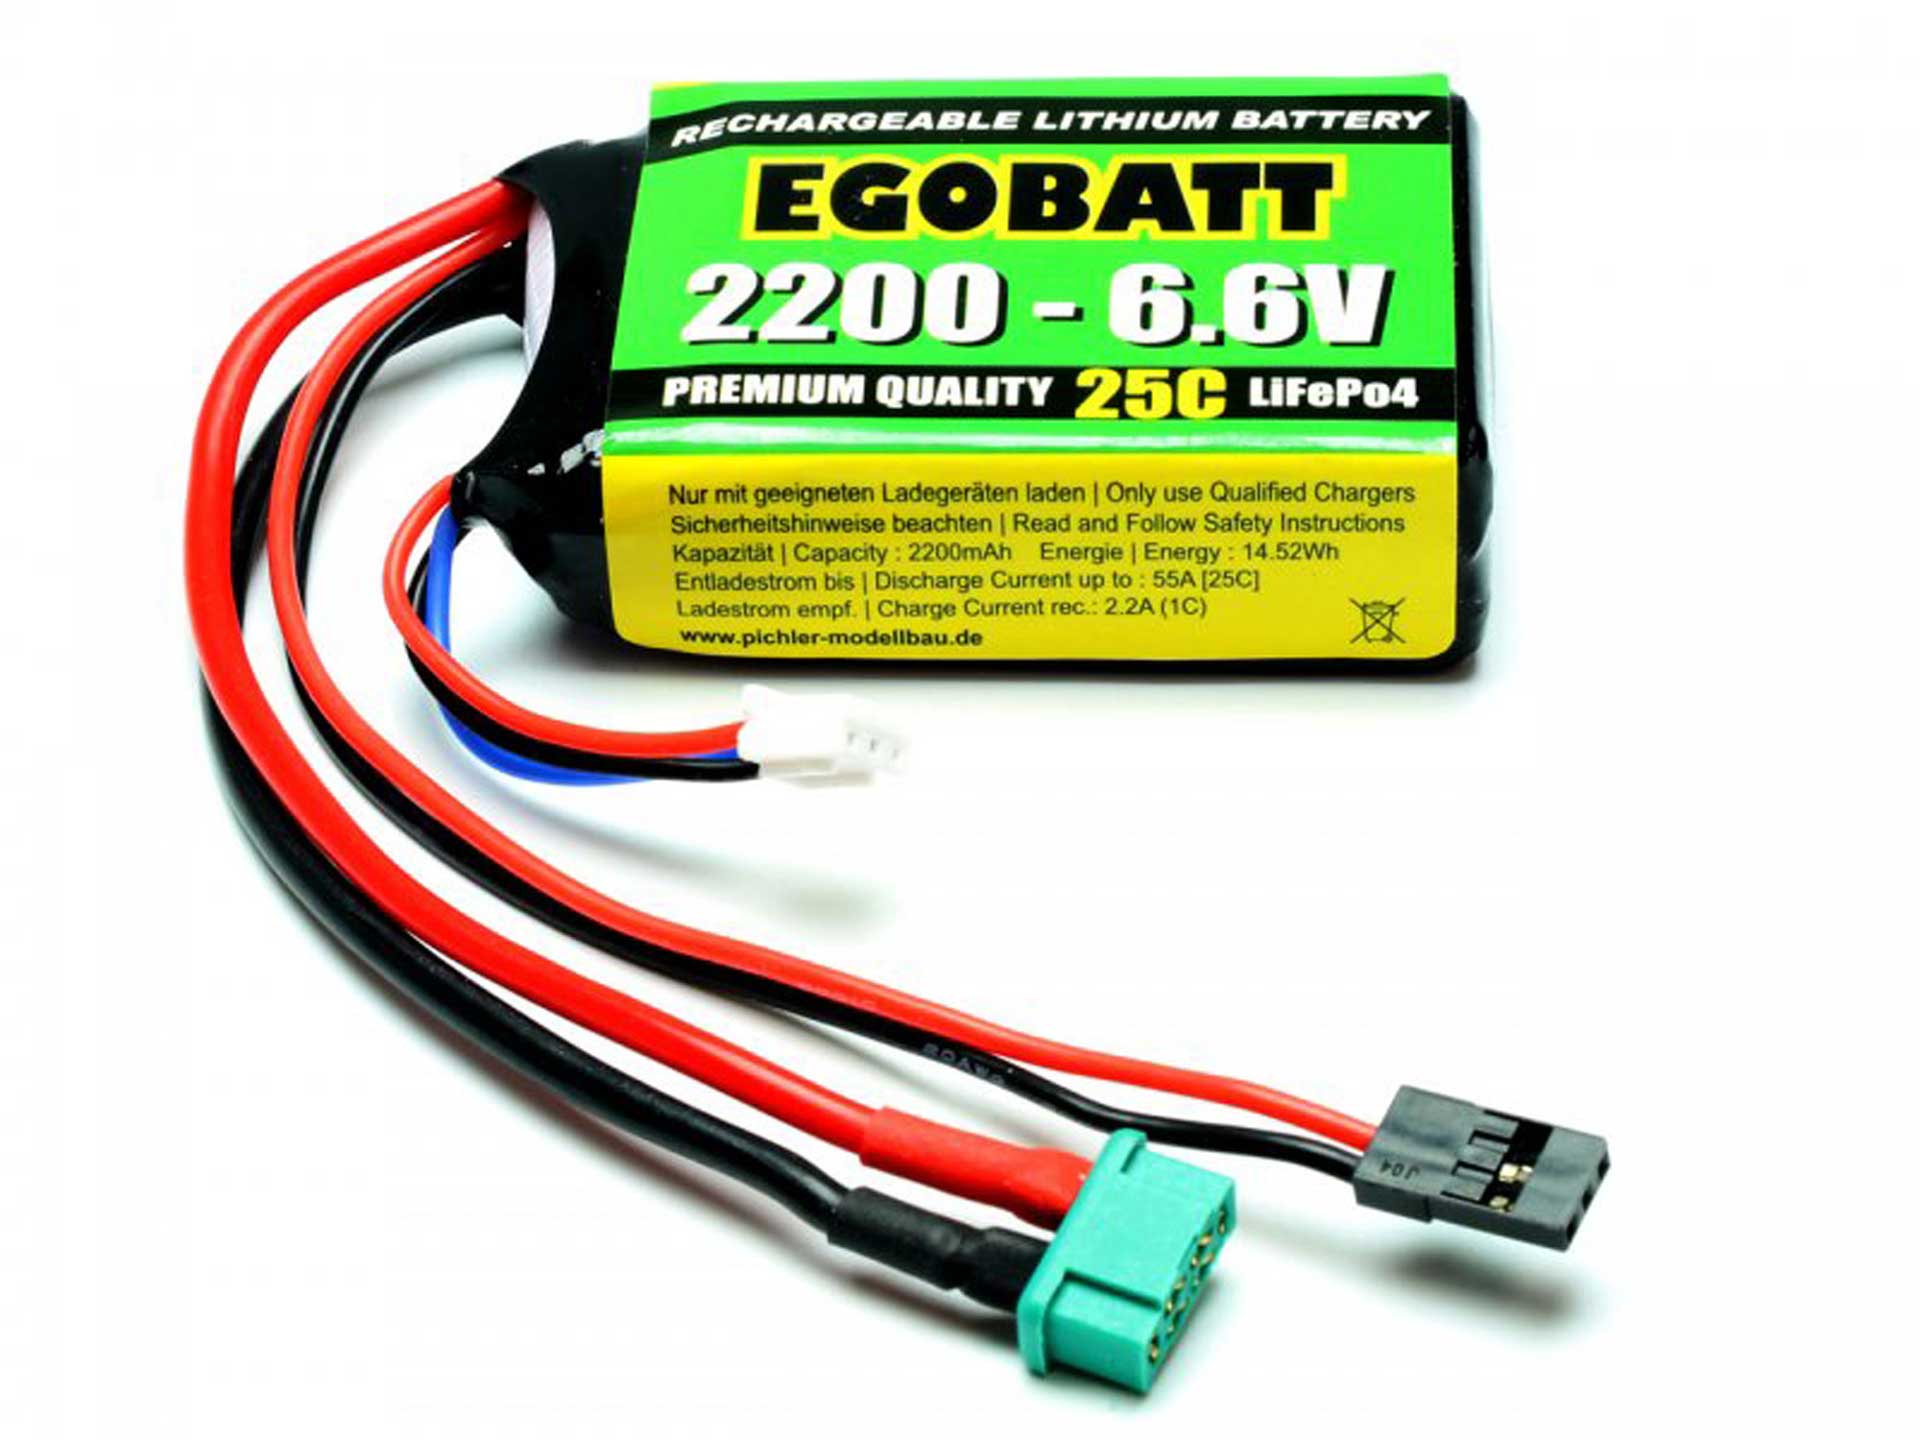 Pichler LiFe Battery EGOBATT 2200 - 6.6V (25C)